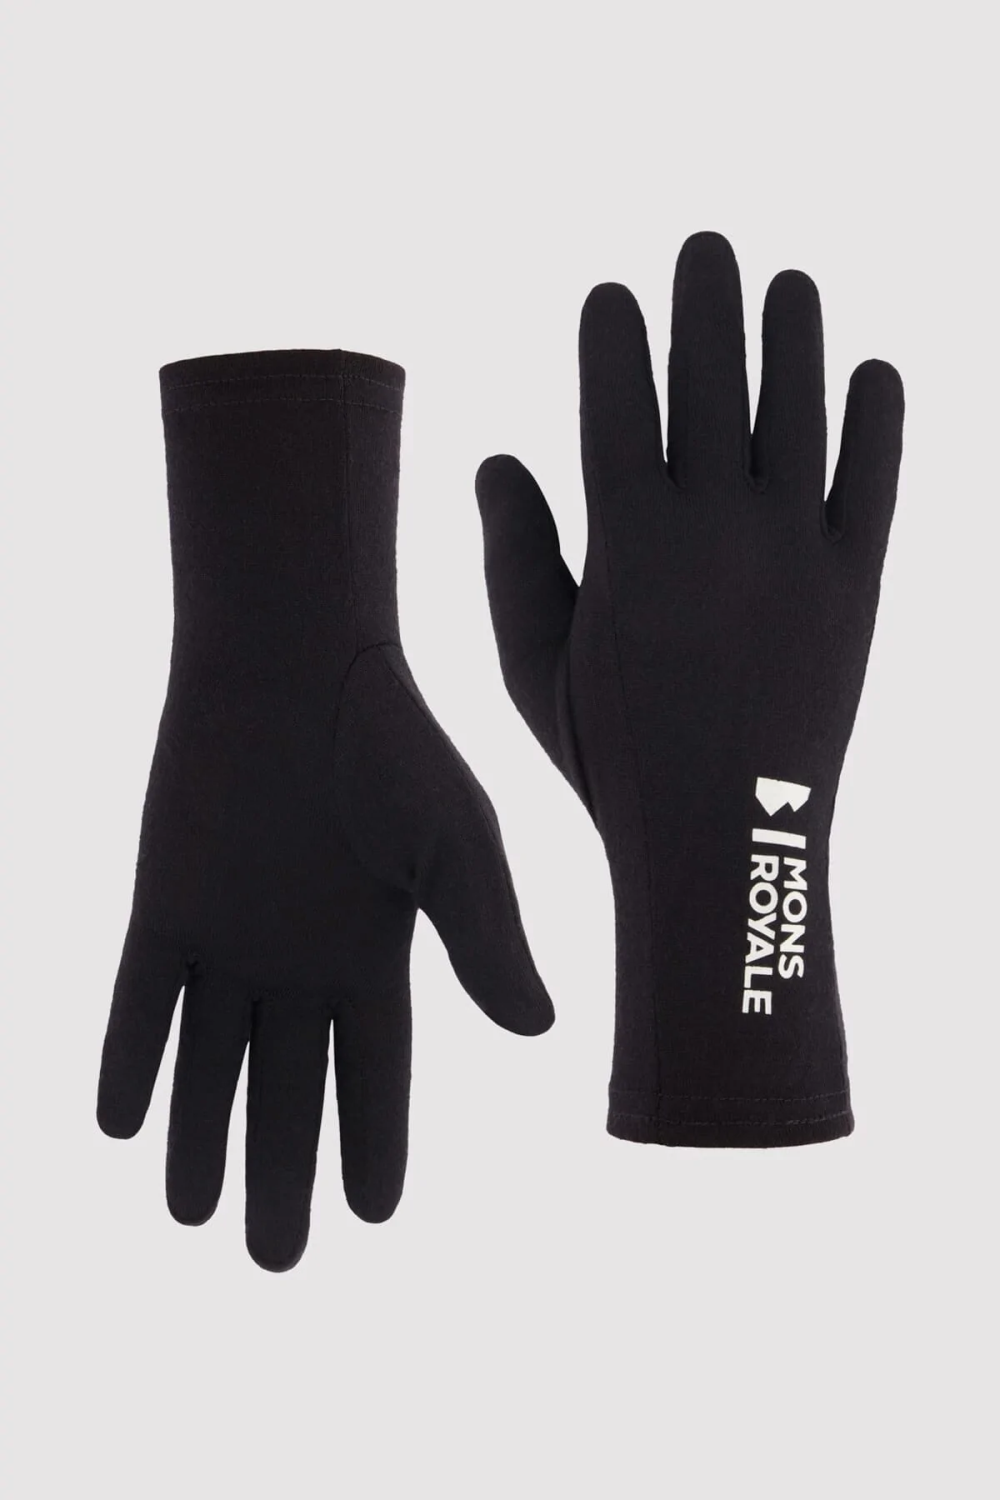 Mons Royale Olympus liner glove